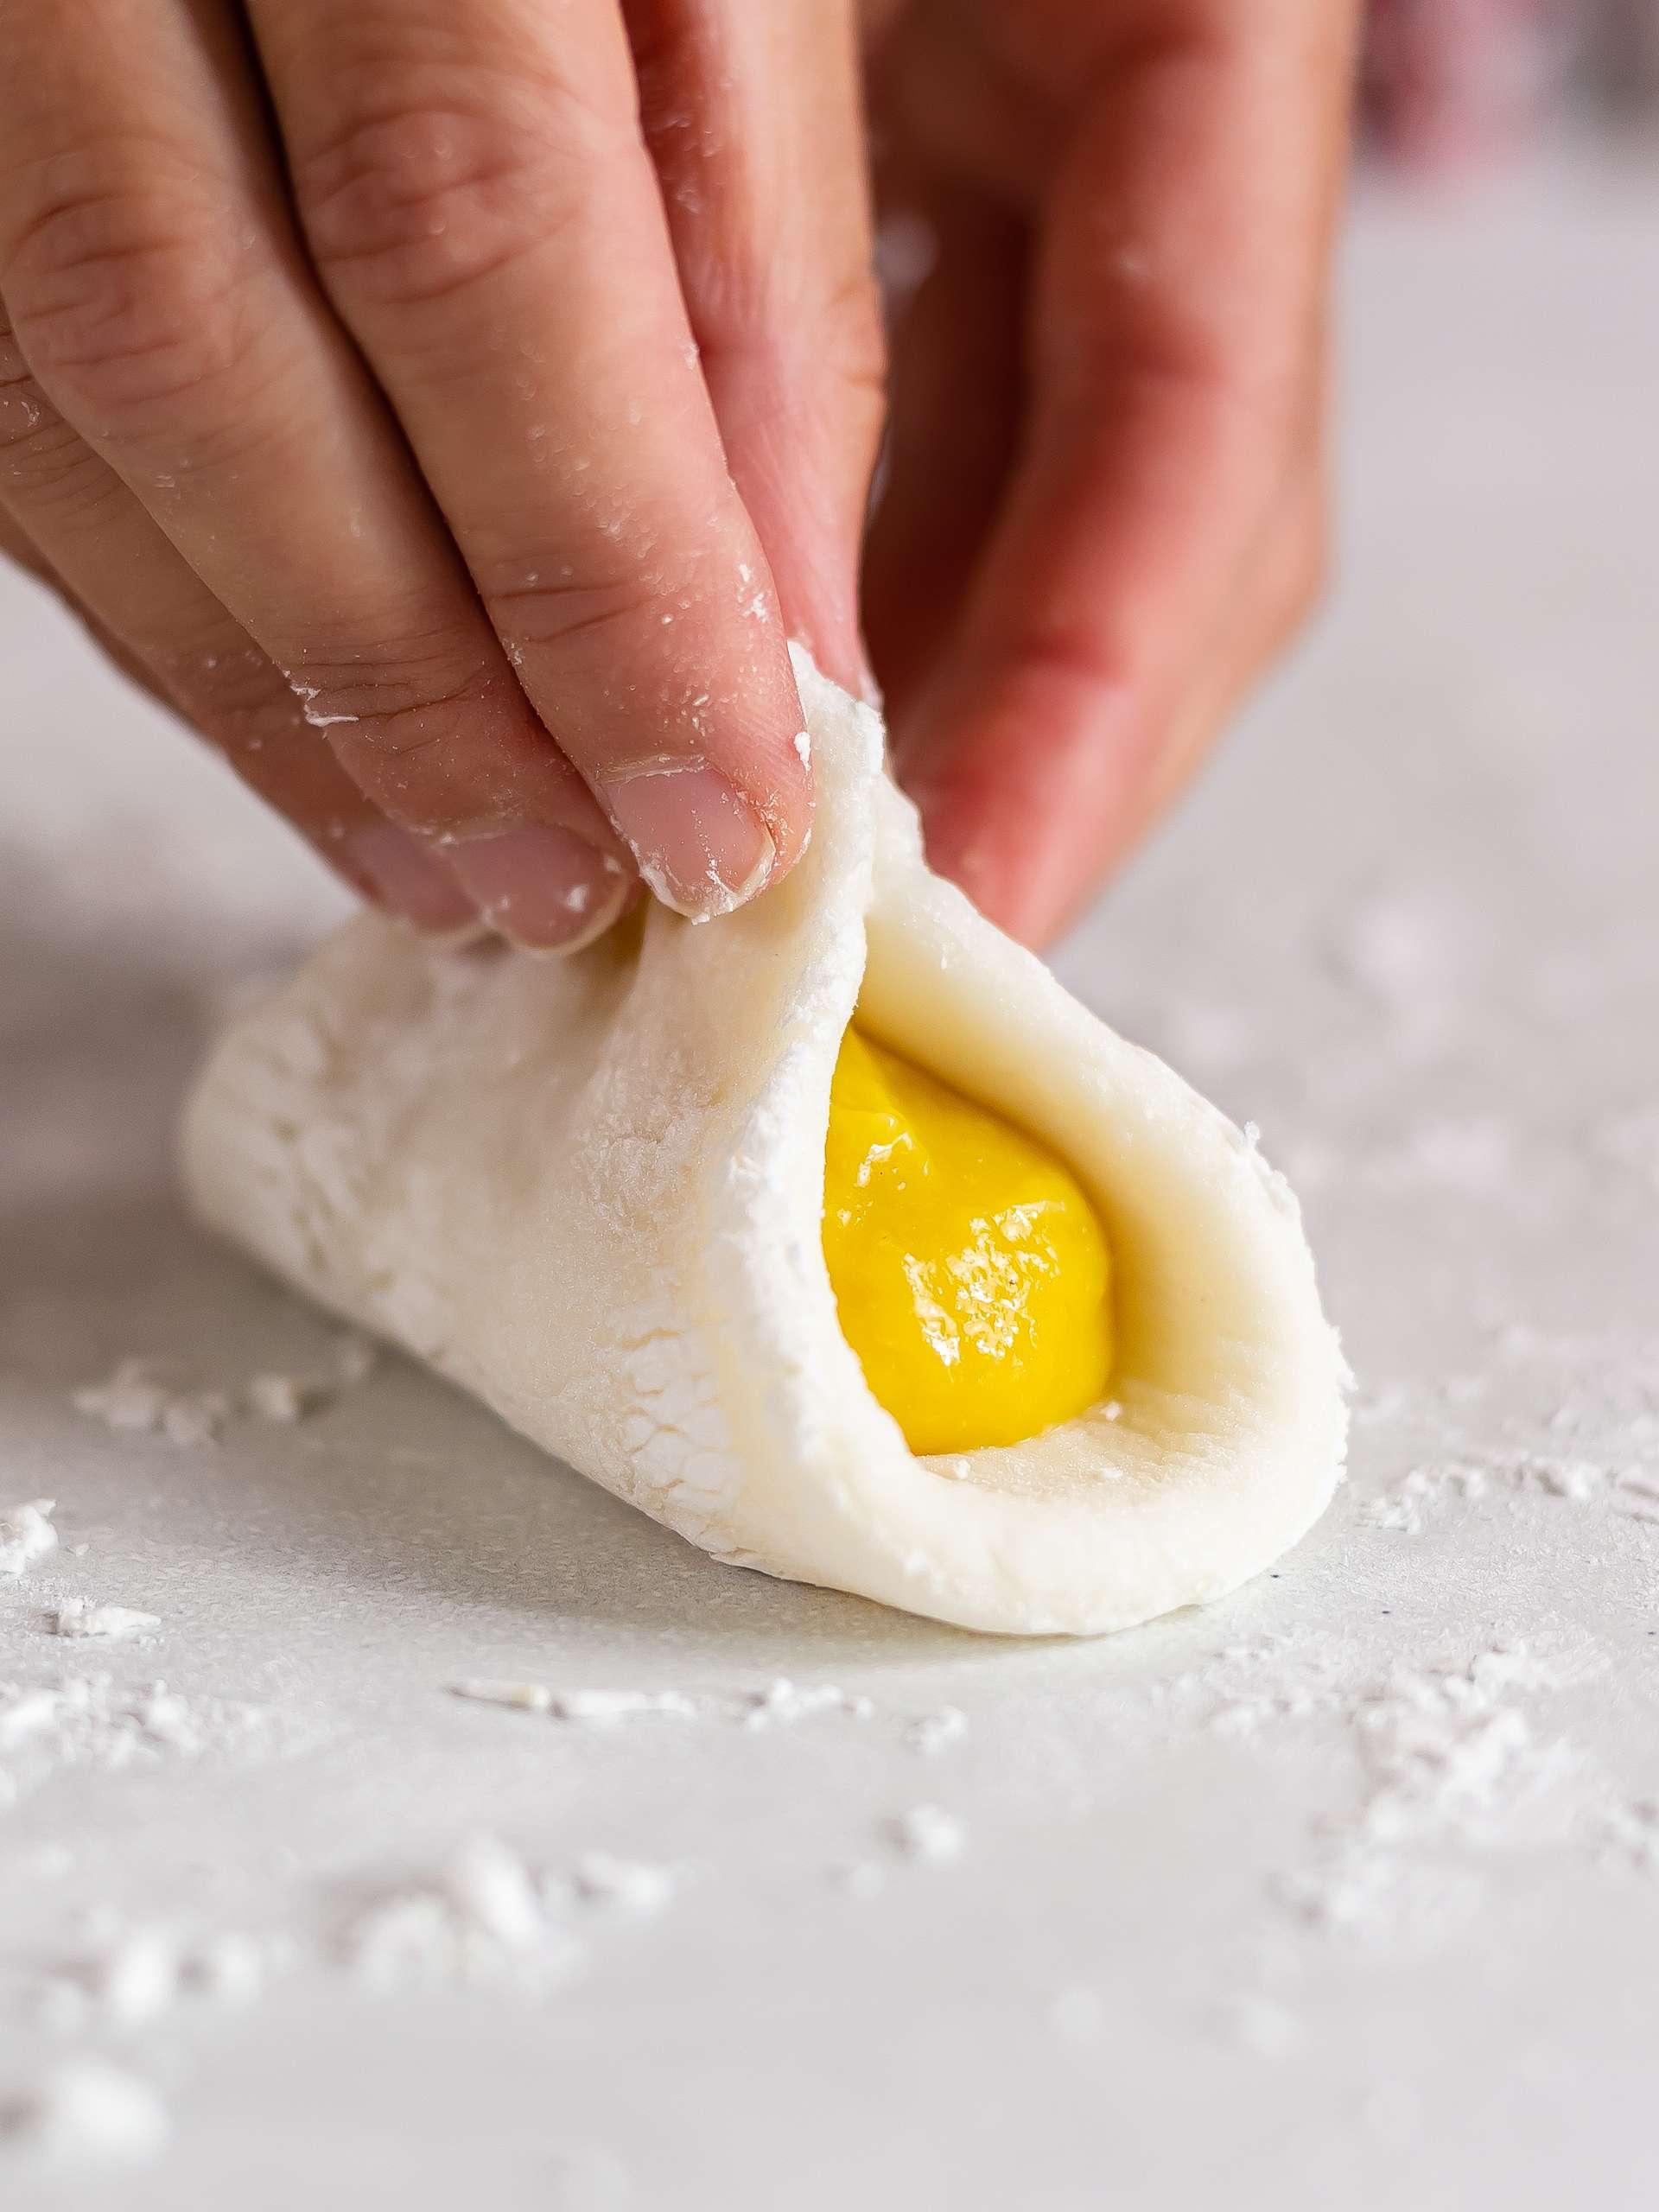 fold mochi dough over the mango filling